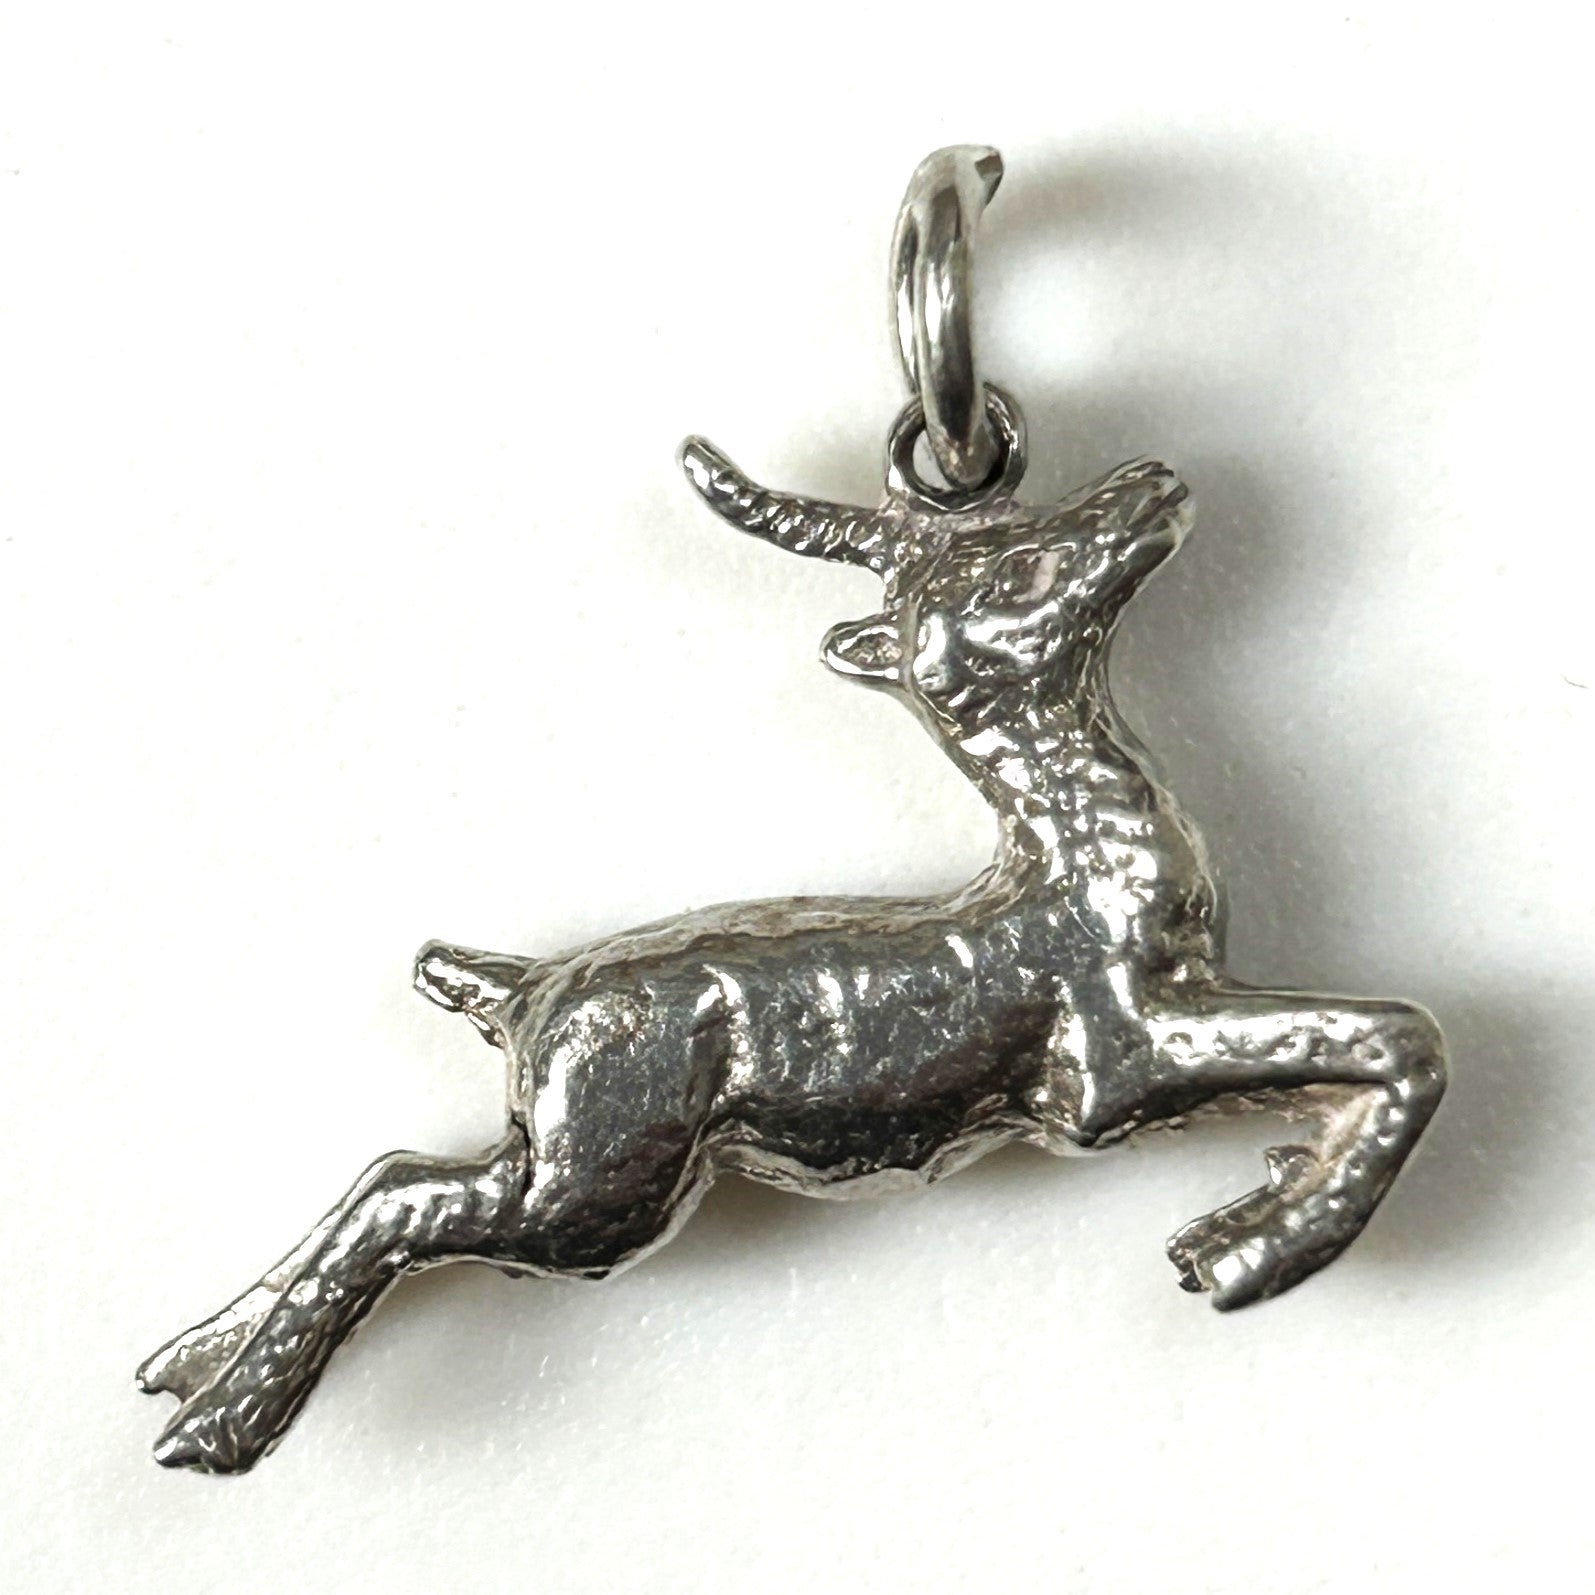 Miniature Silver “Springbok” Charm Pendant